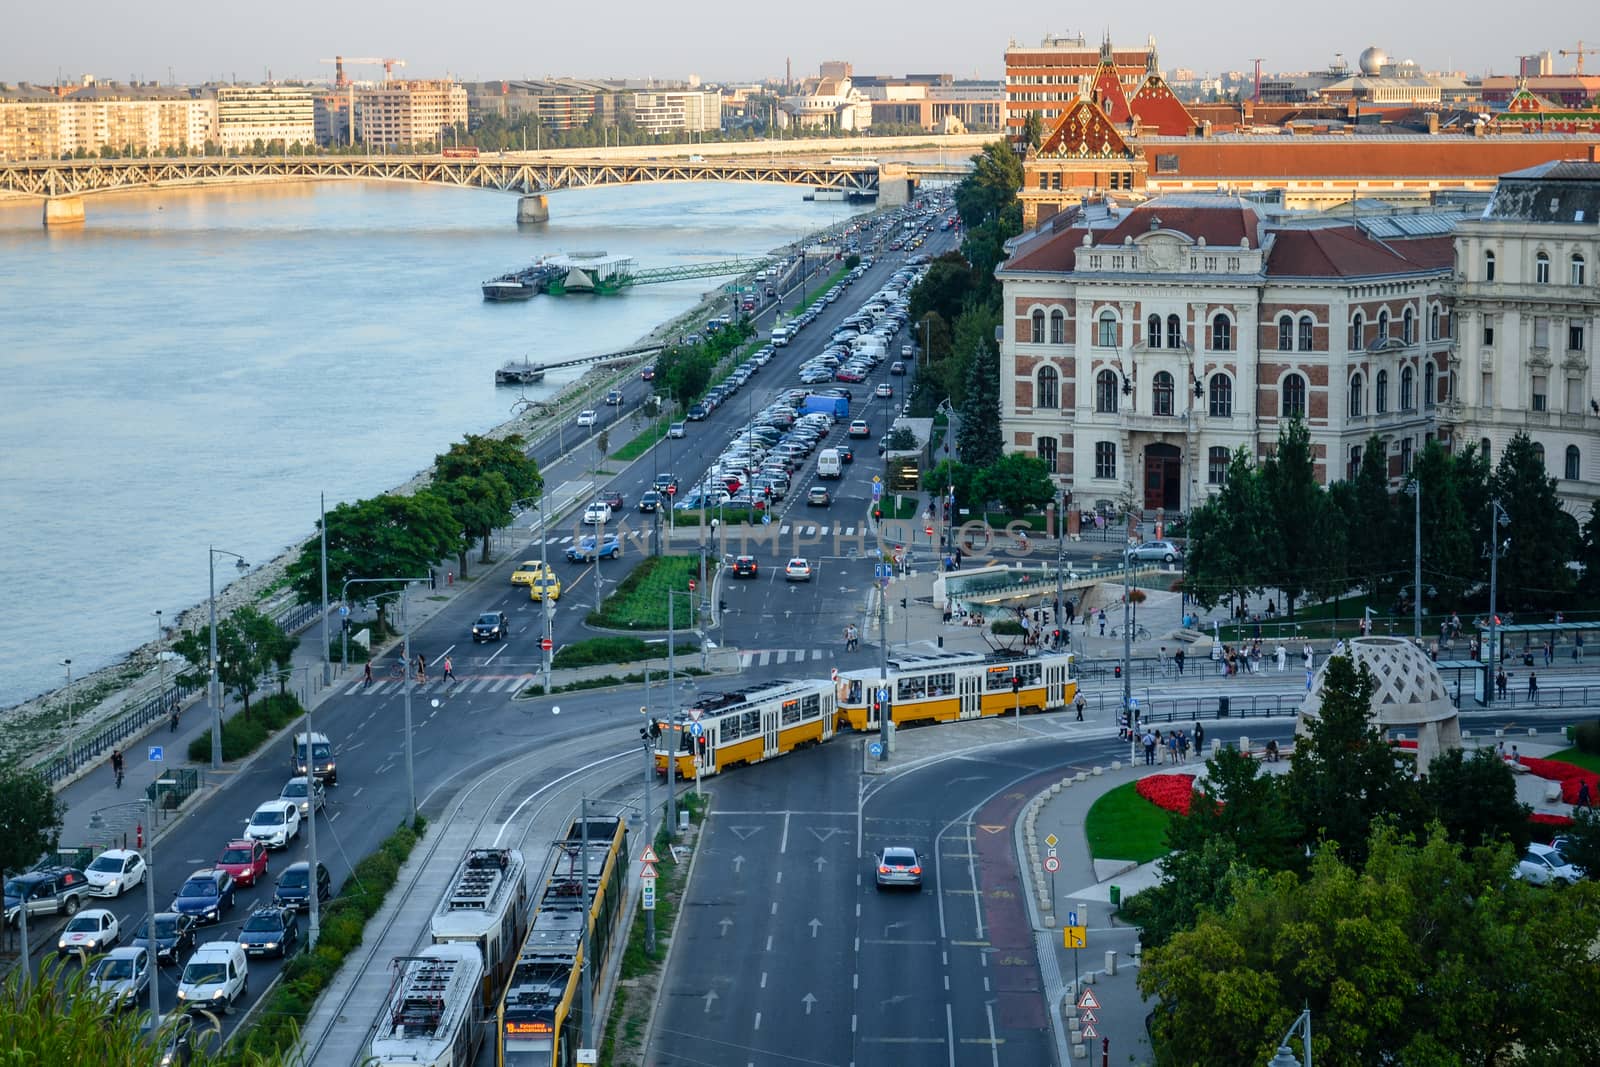 Embankment of the Danube in Budapest, Hungary